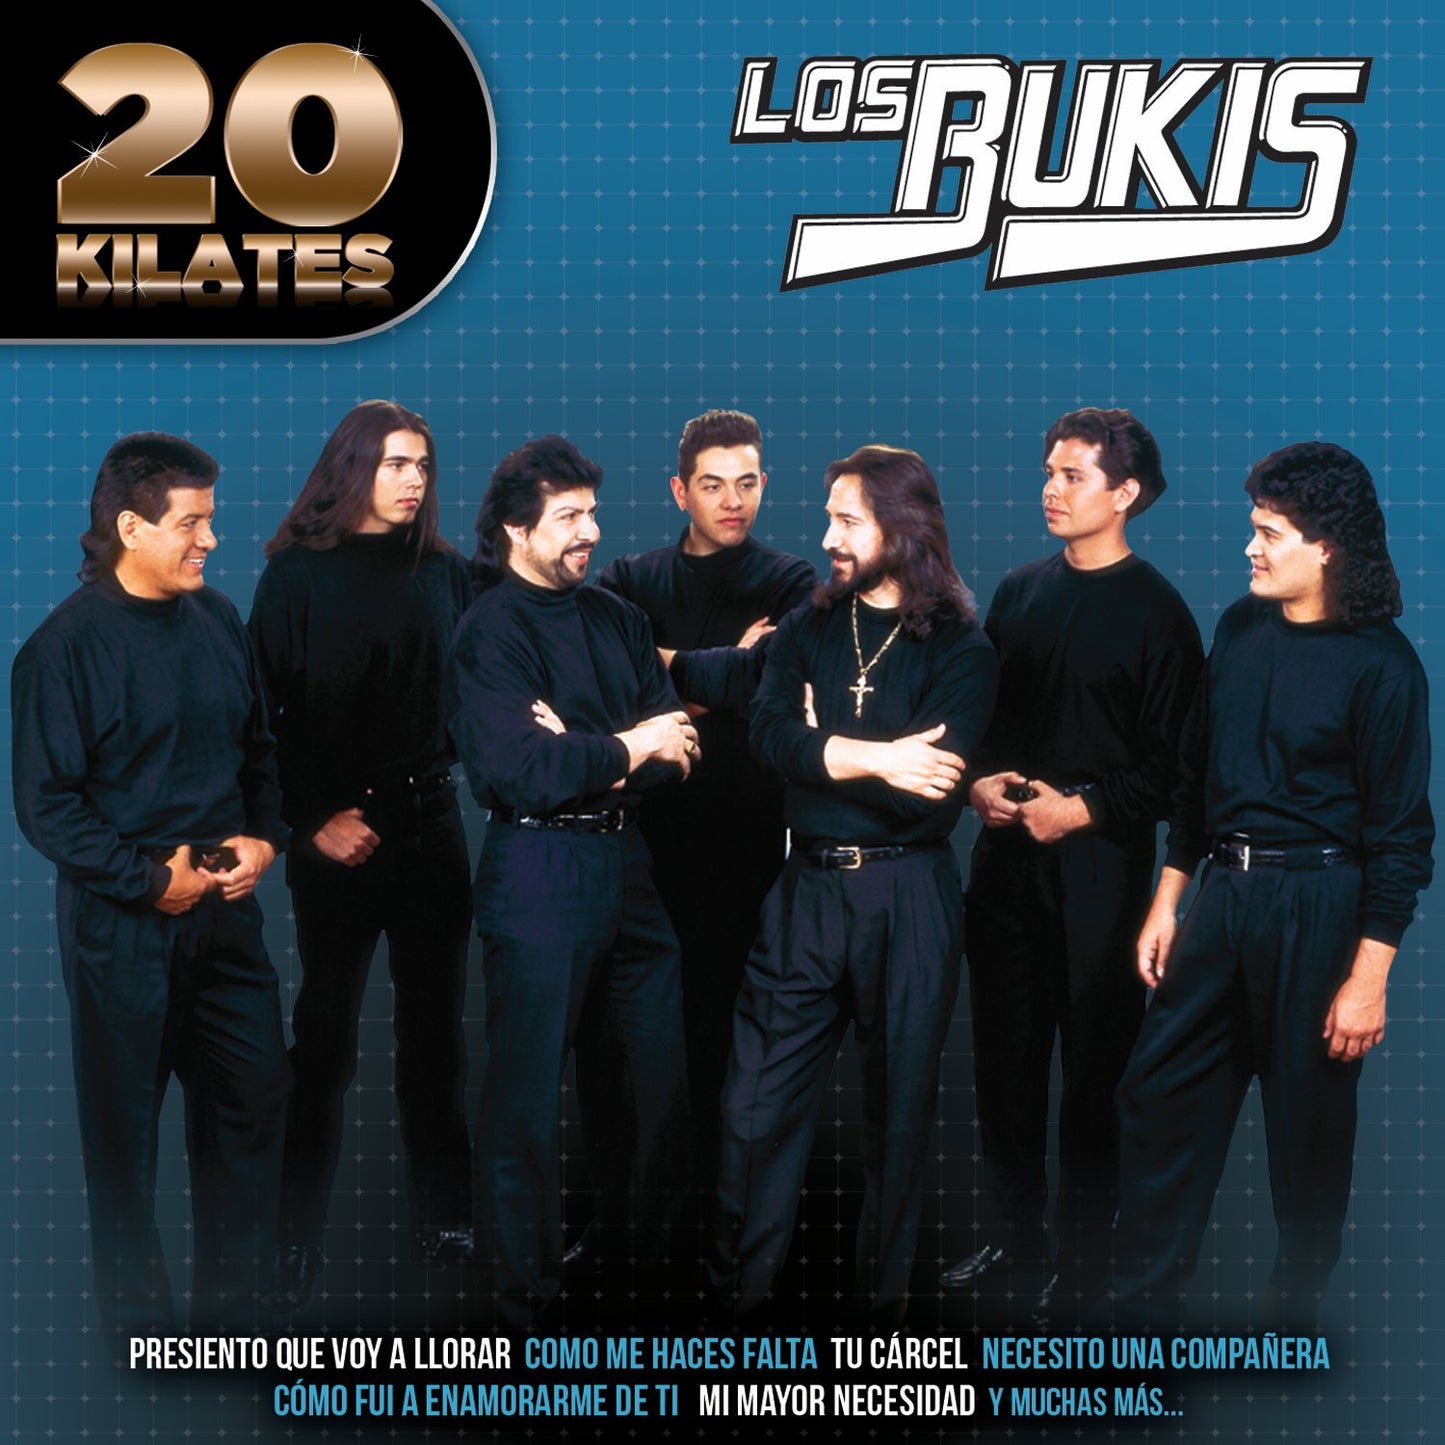 Los Bukis - 20 Kilates (CD)